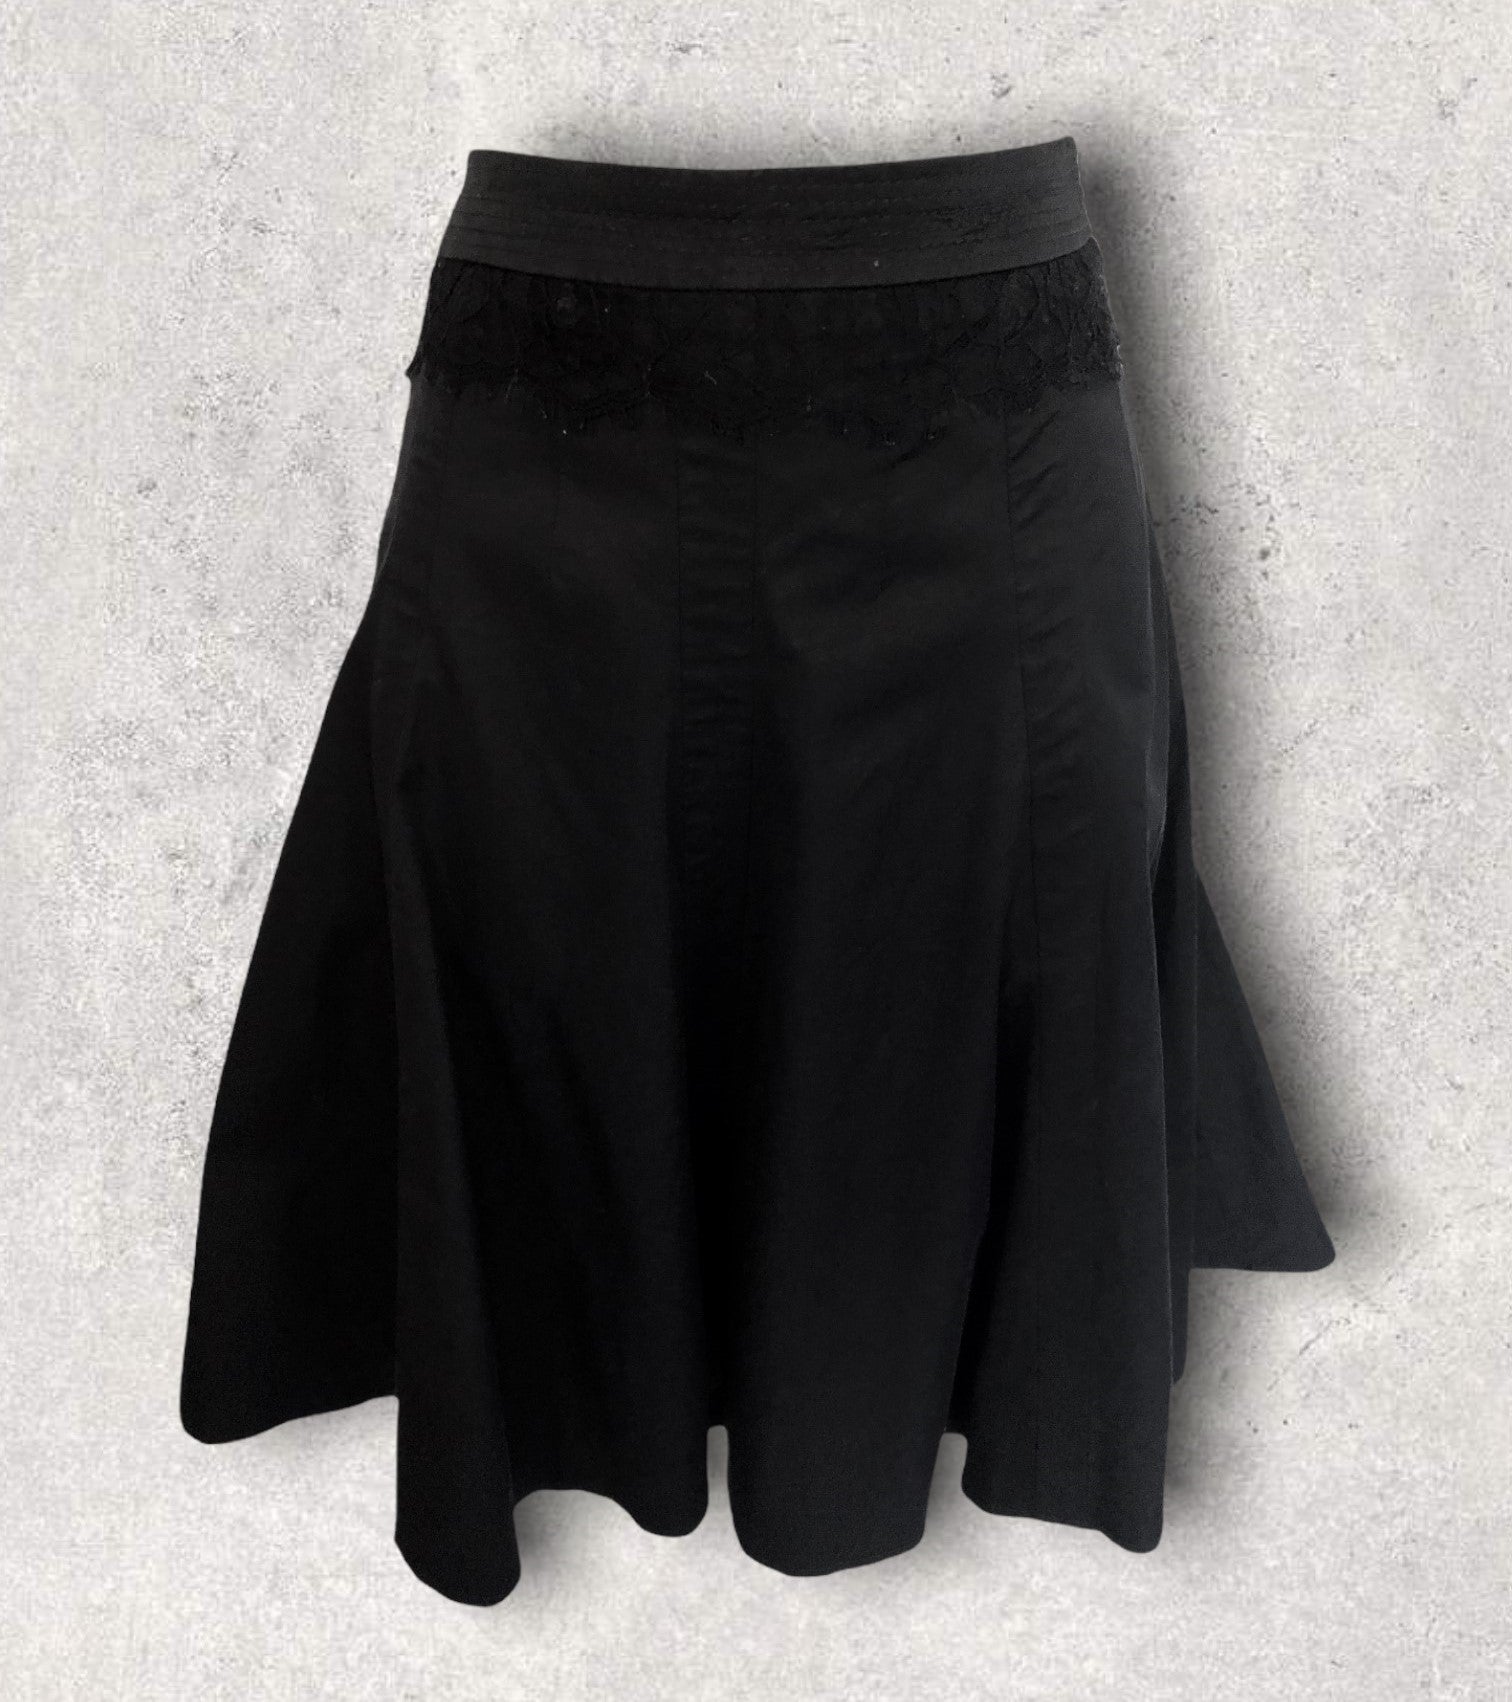 Karen Millen Ladies Black Satin & Lace A-Line Skirt UK 8 US 4 EU 36 Timeless Fashions